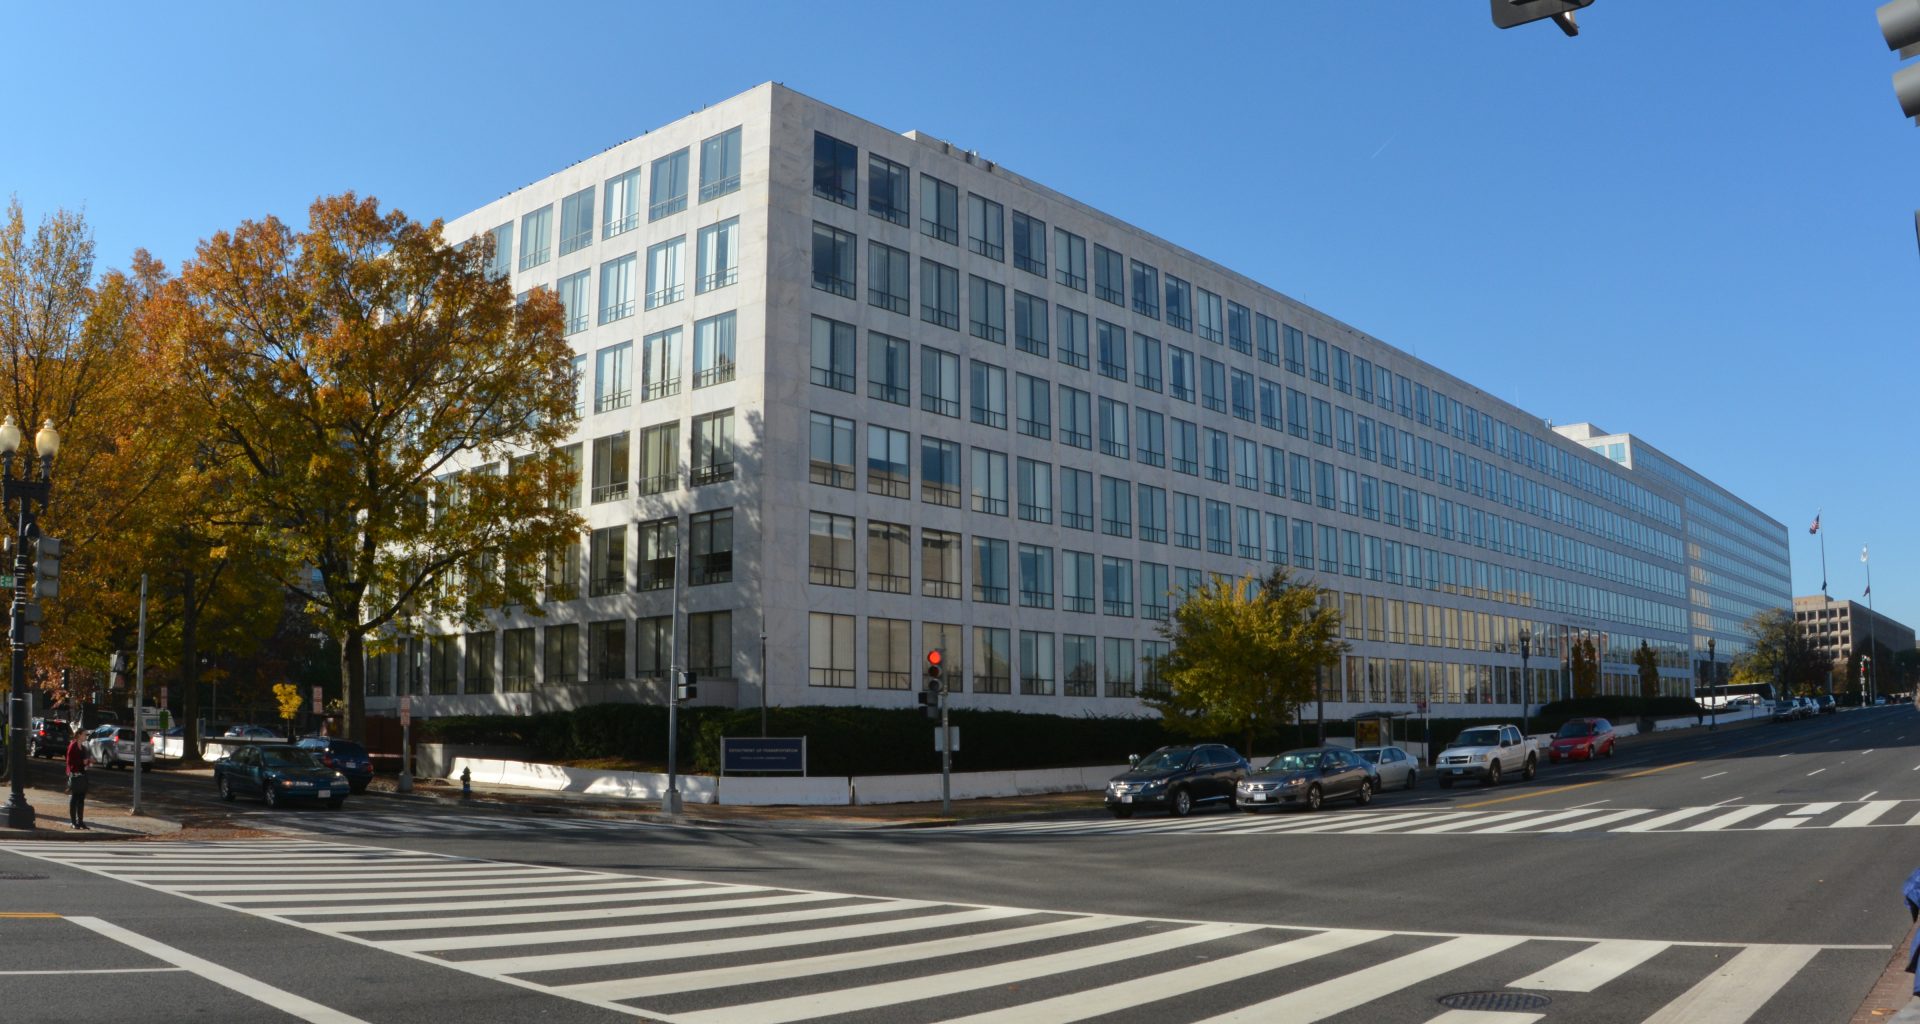 FAA headquarters in Washington, D.C.